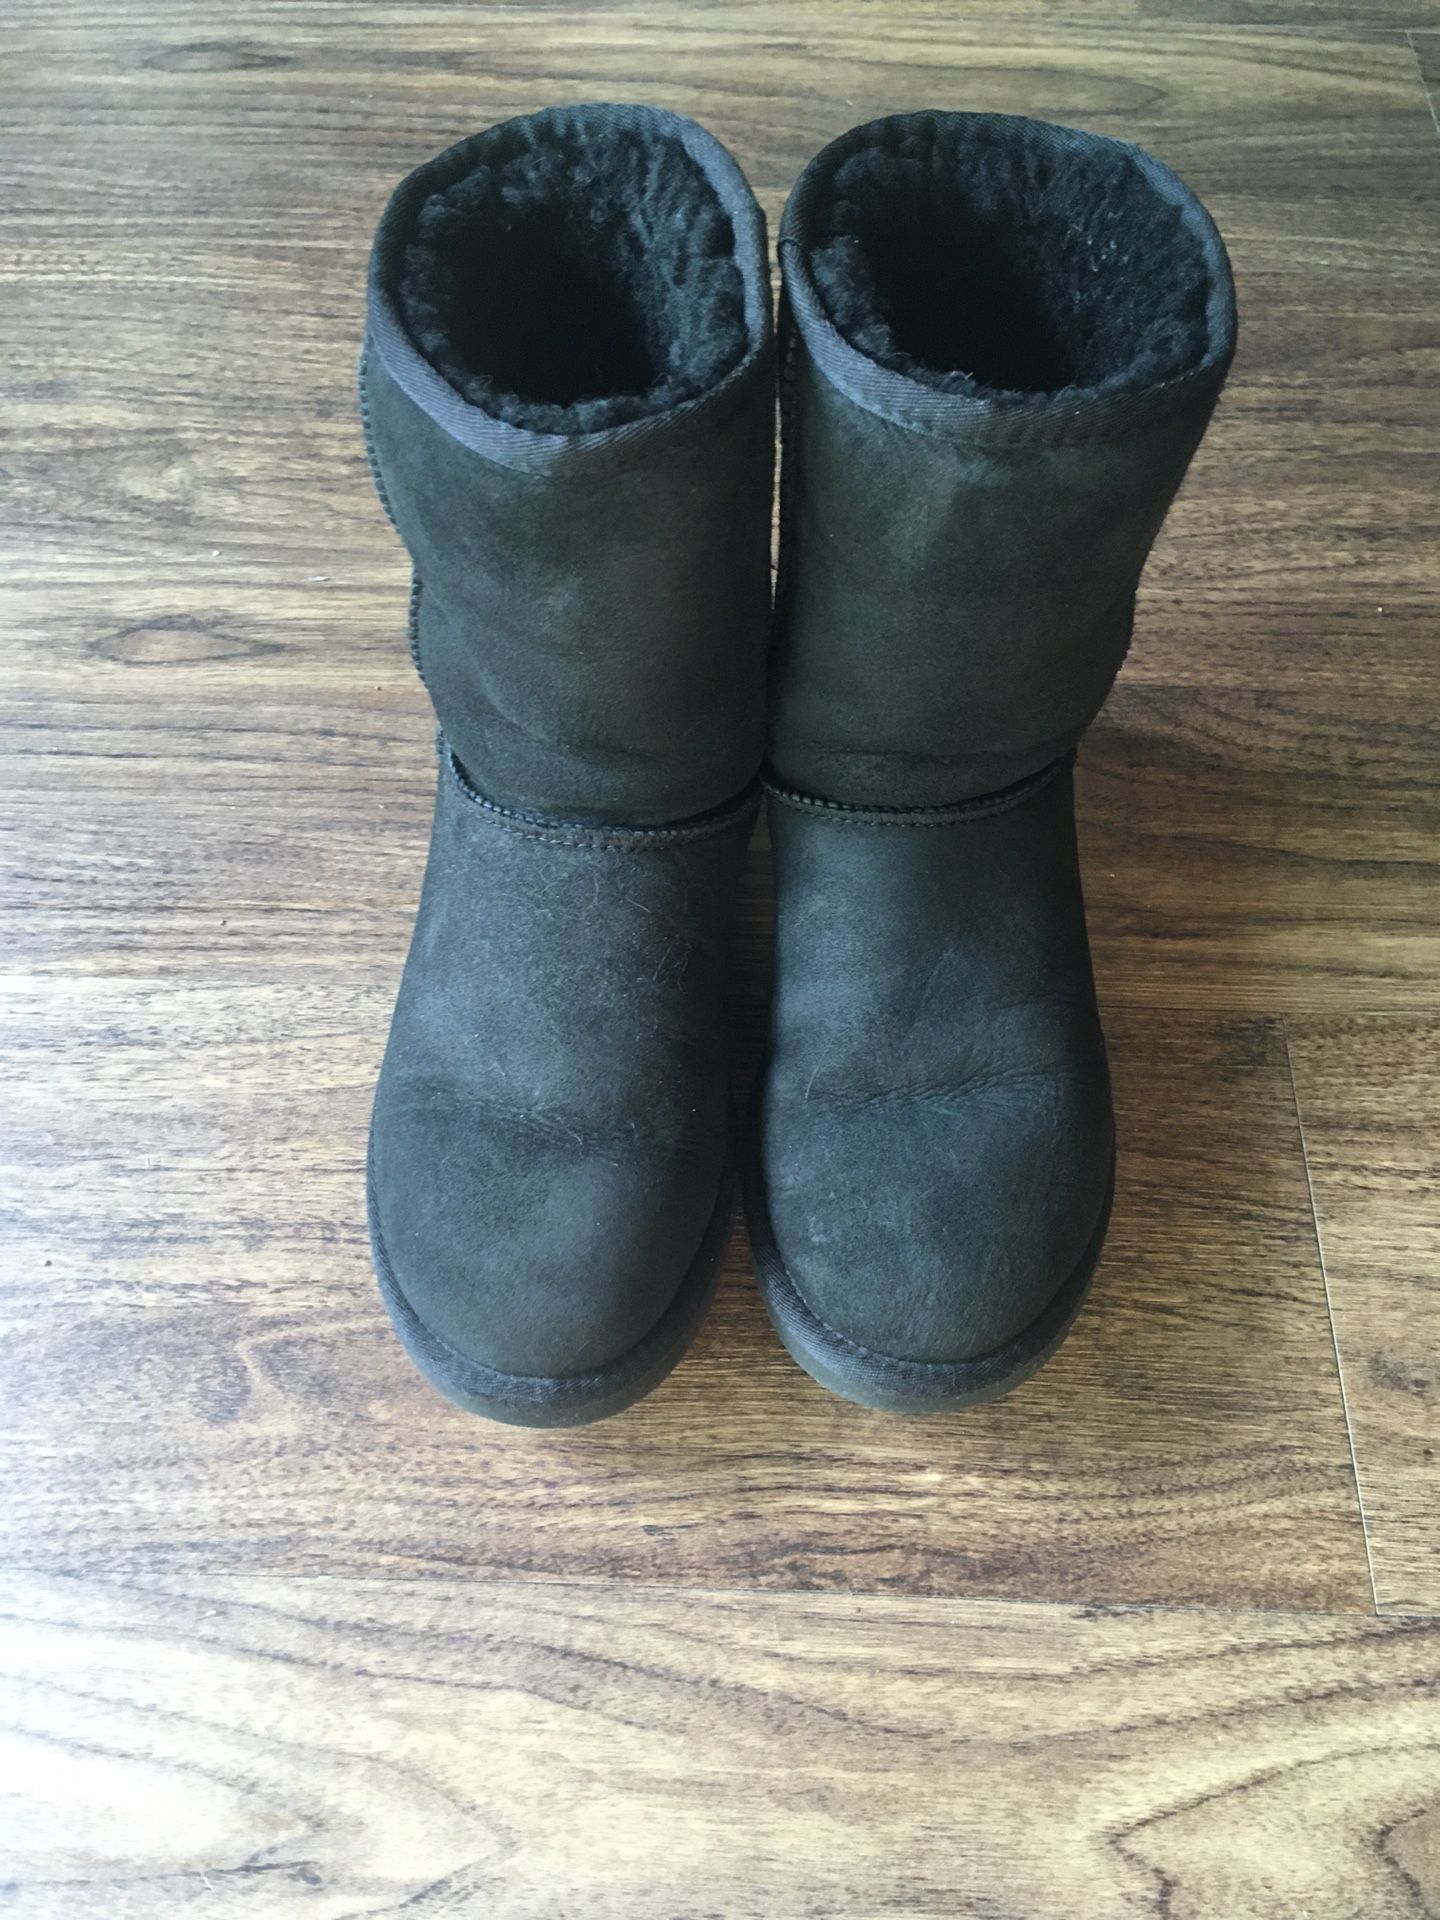 Ugg Boots size 8, Black + Carekit